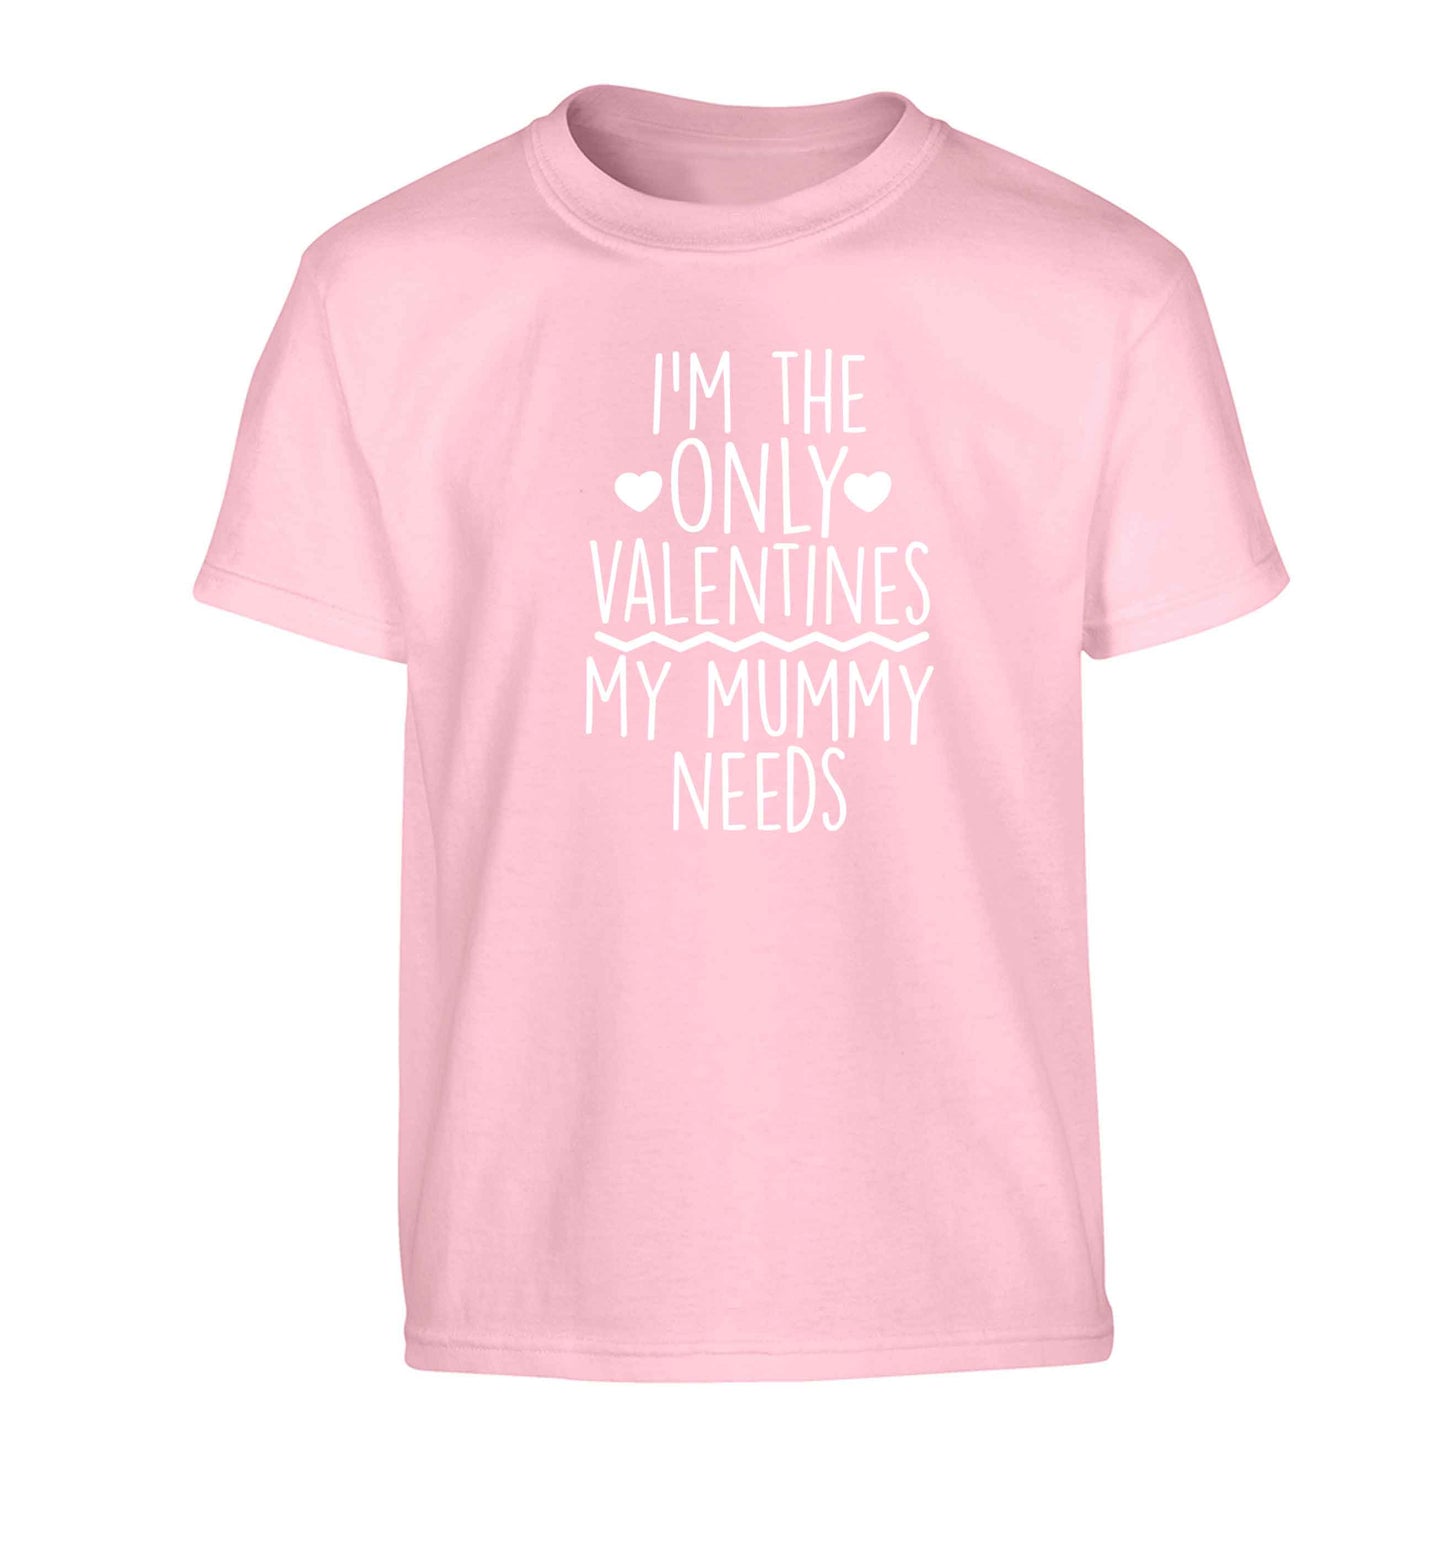 I'm the only valentines my mummy needs Children's light pink Tshirt 12-13 Years